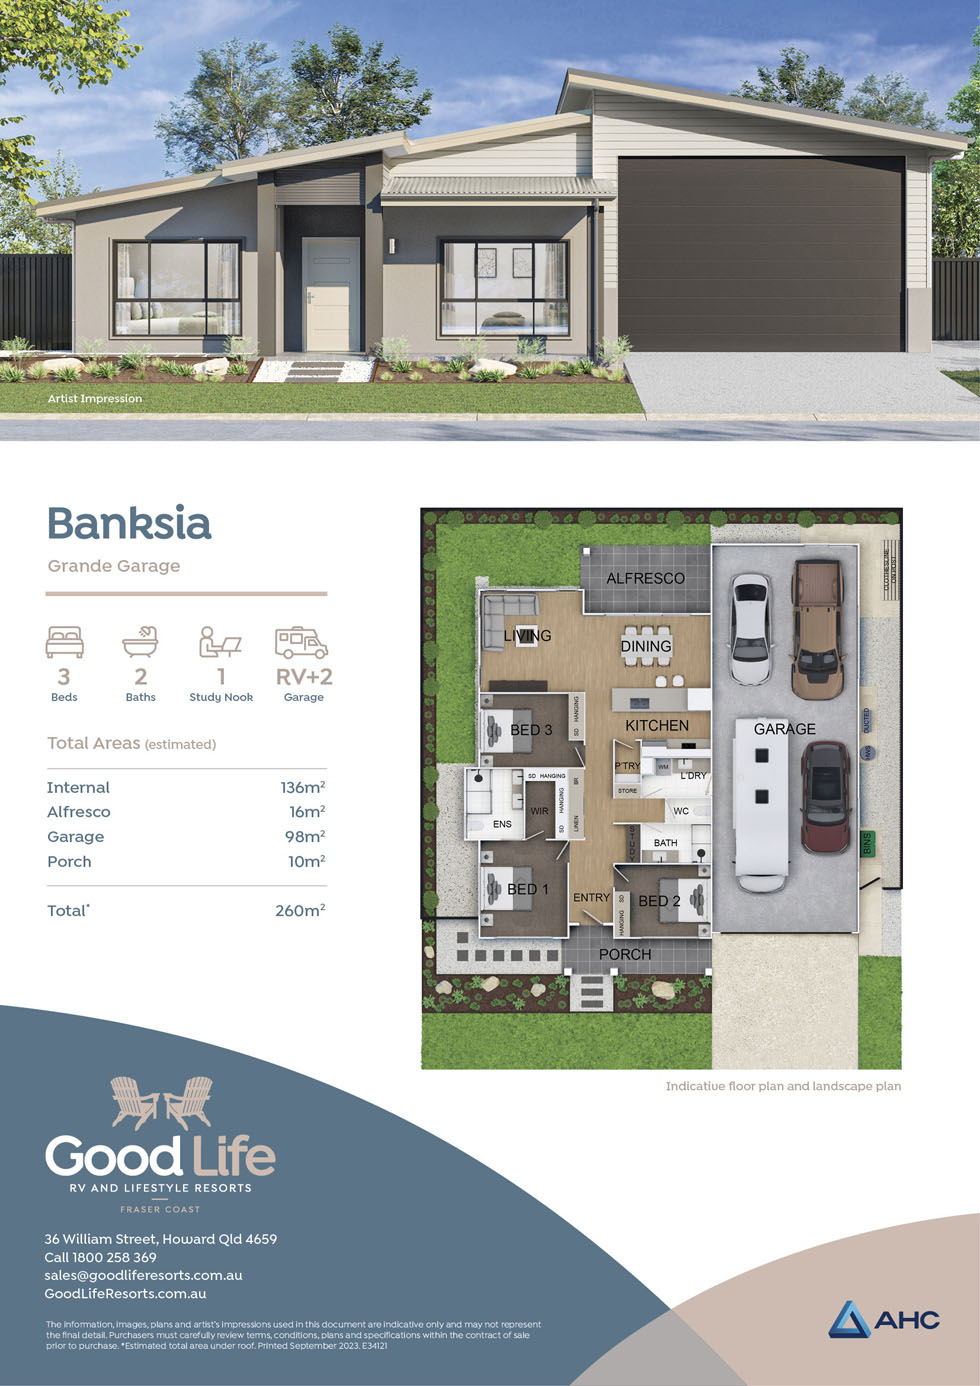 Home Design: Banksia Grande Garage